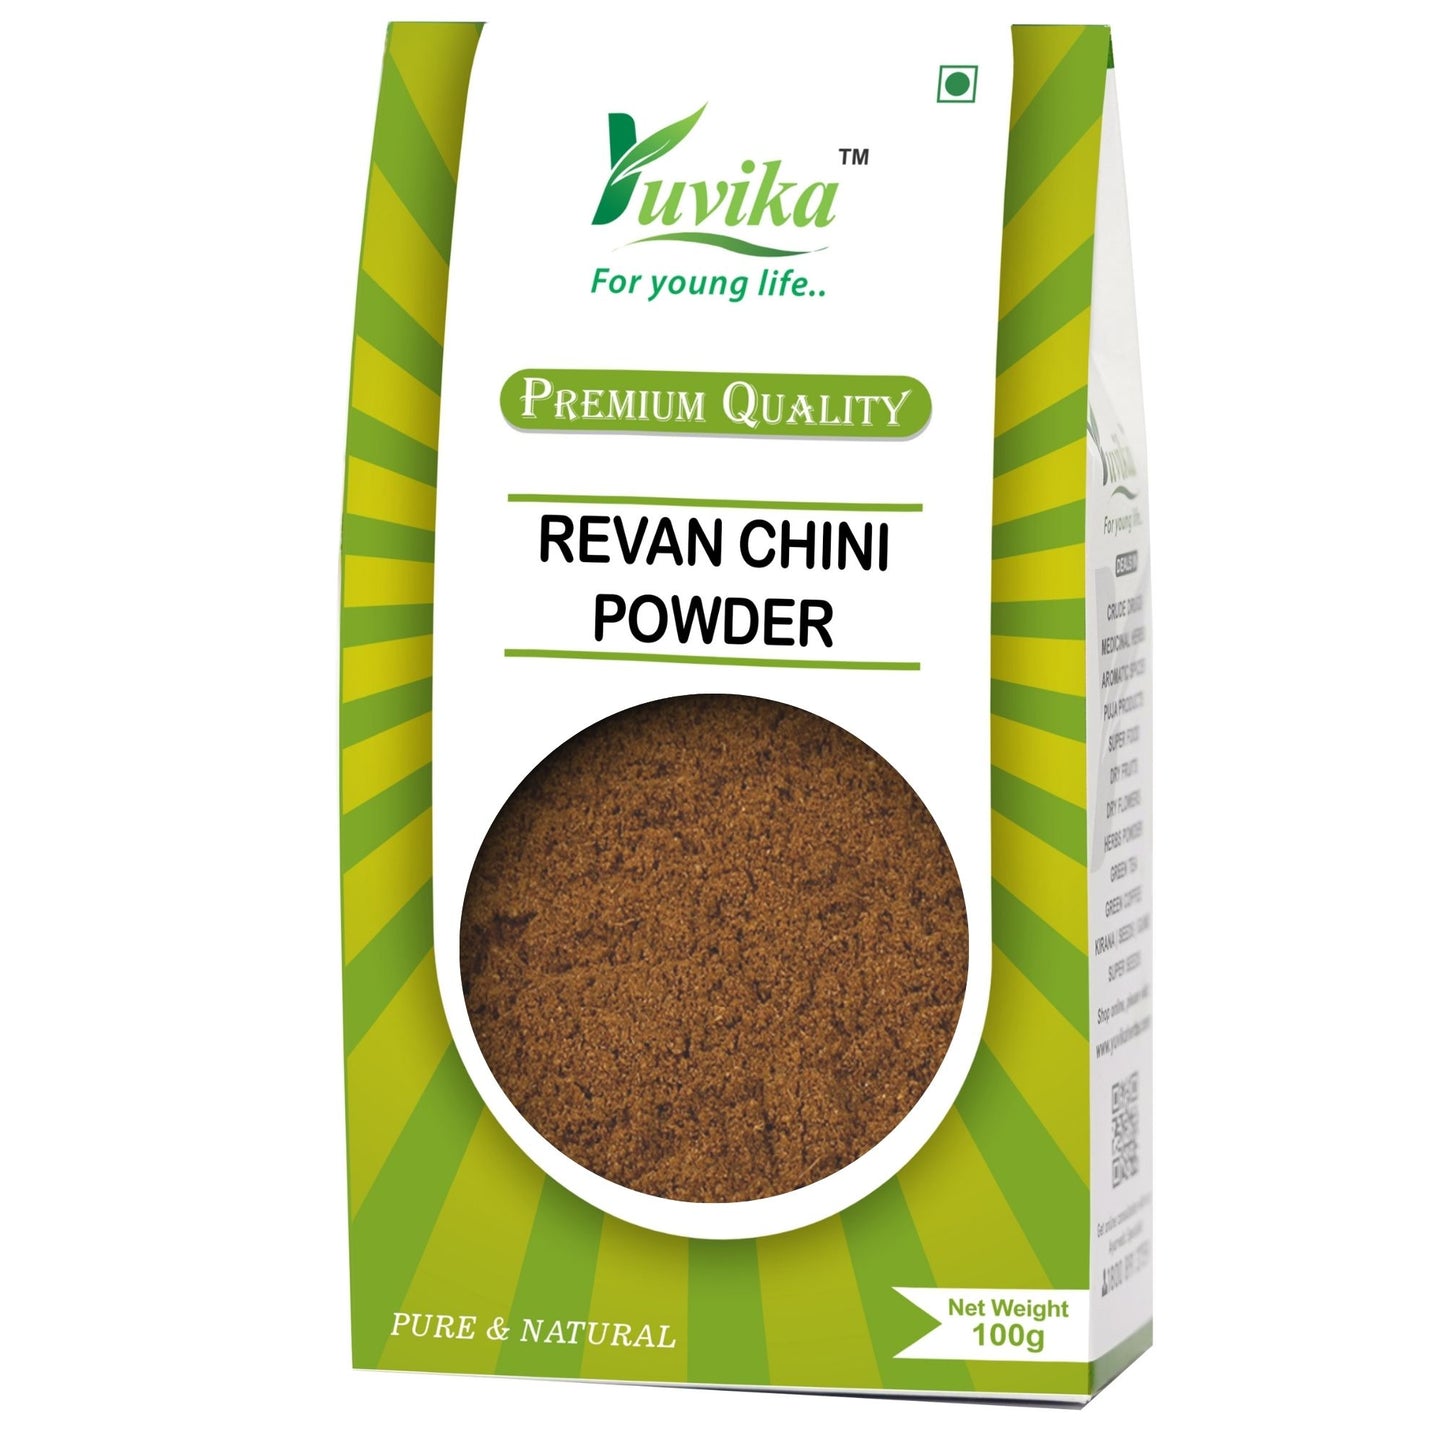 Revan Chini Powder - Rheum Emodi - Indian Rhubarb (100g)